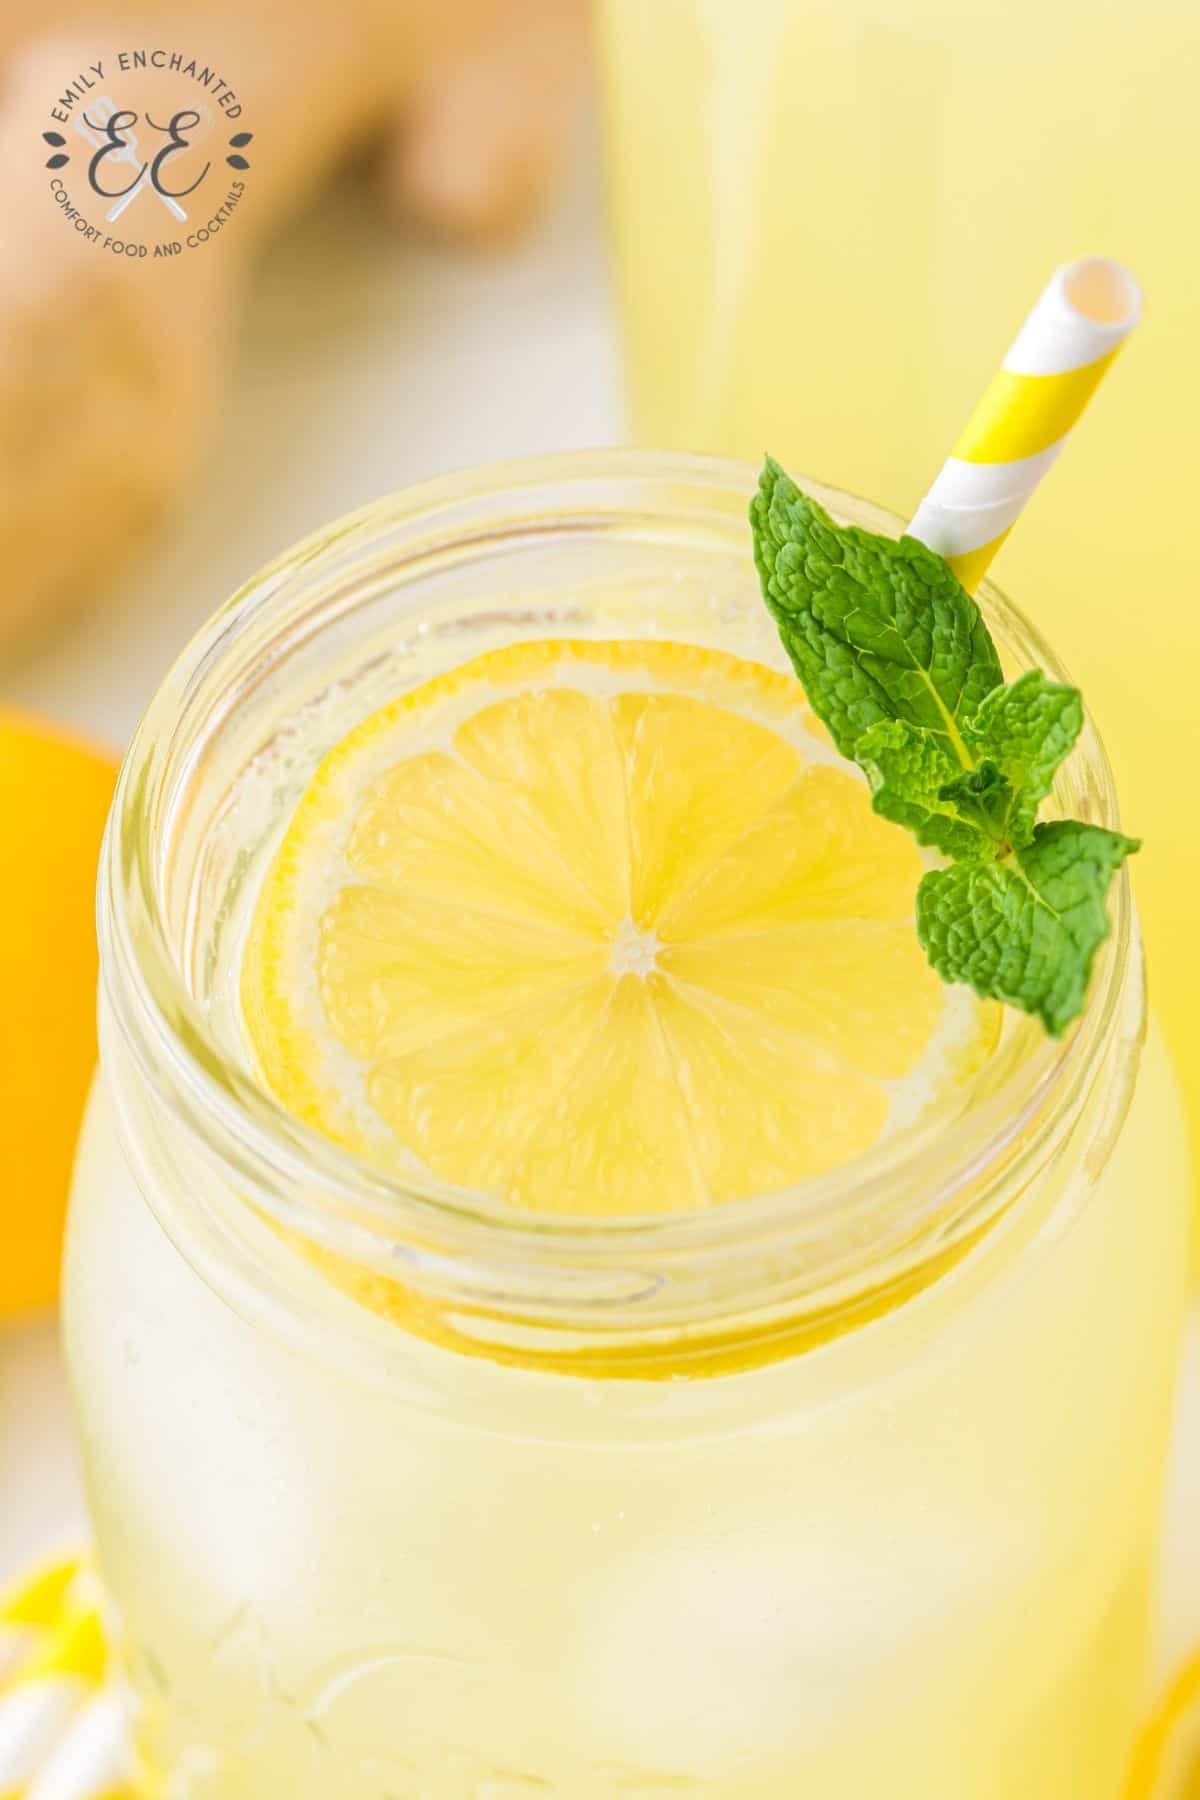 Close up of lemon slice and mint garnish in lemonade